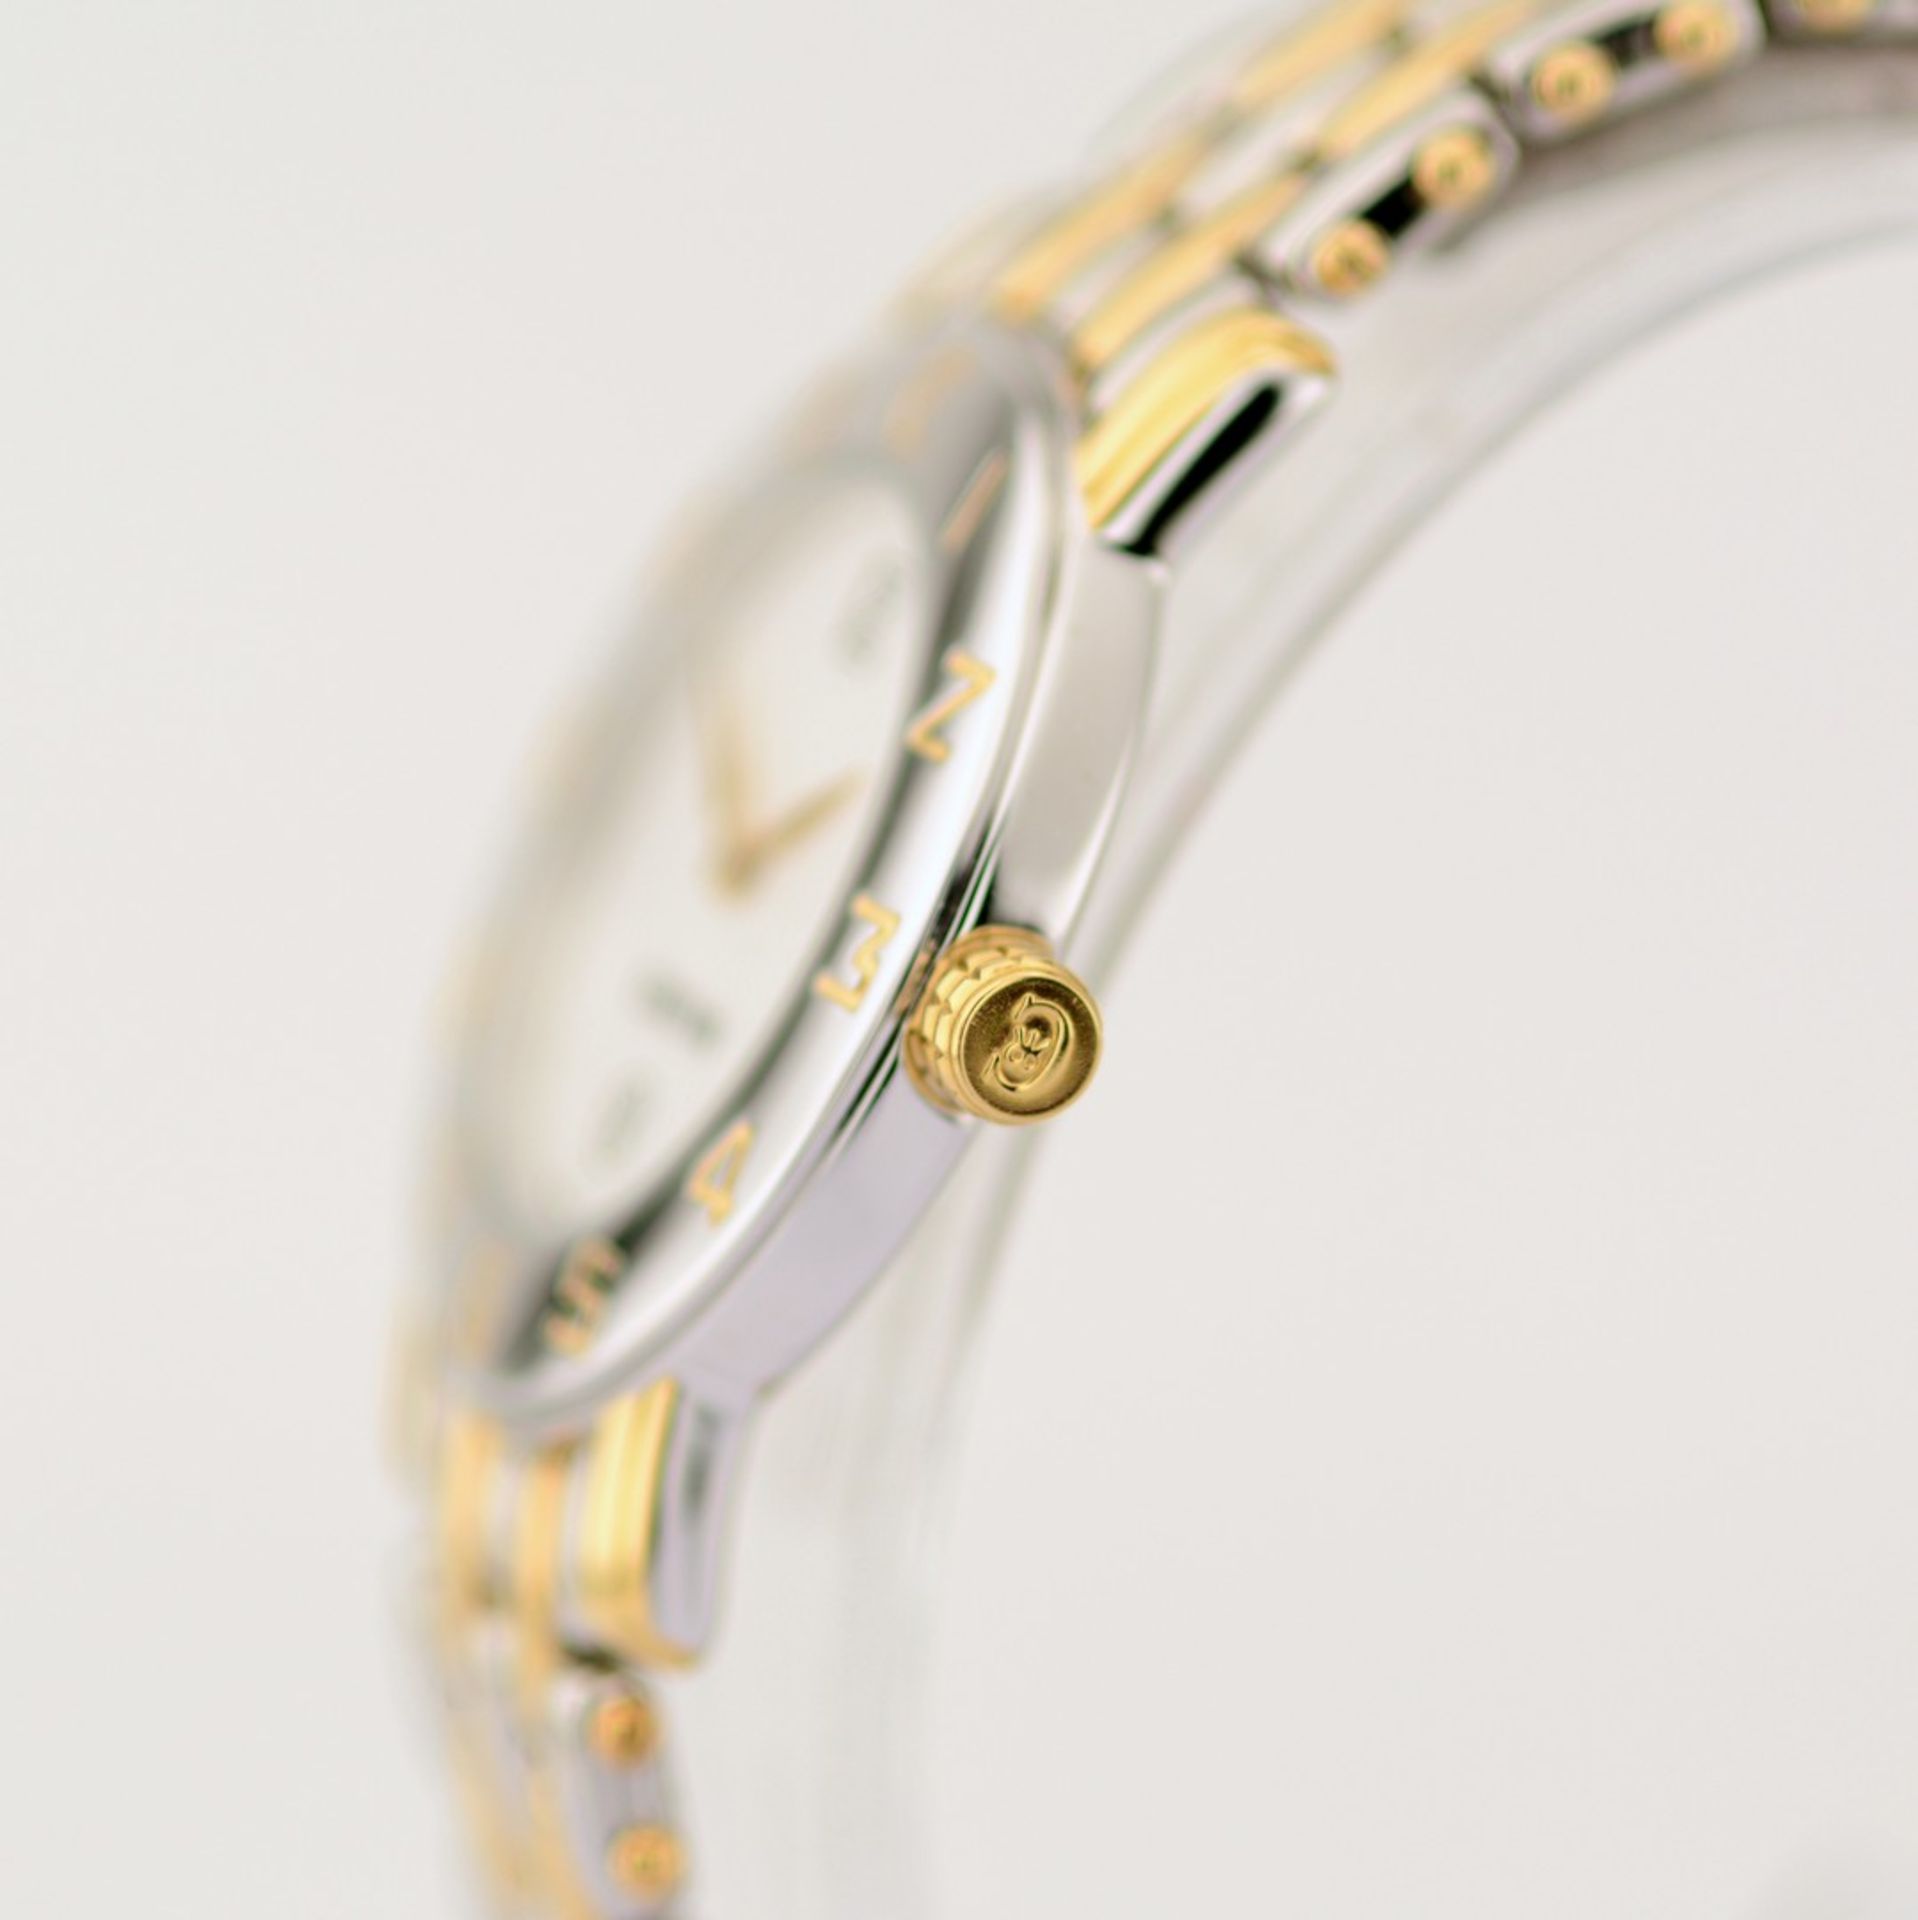 Cerruti / 1881 - Date - (Unworn) Unisex Steel Wrist Watch - Image 4 of 7